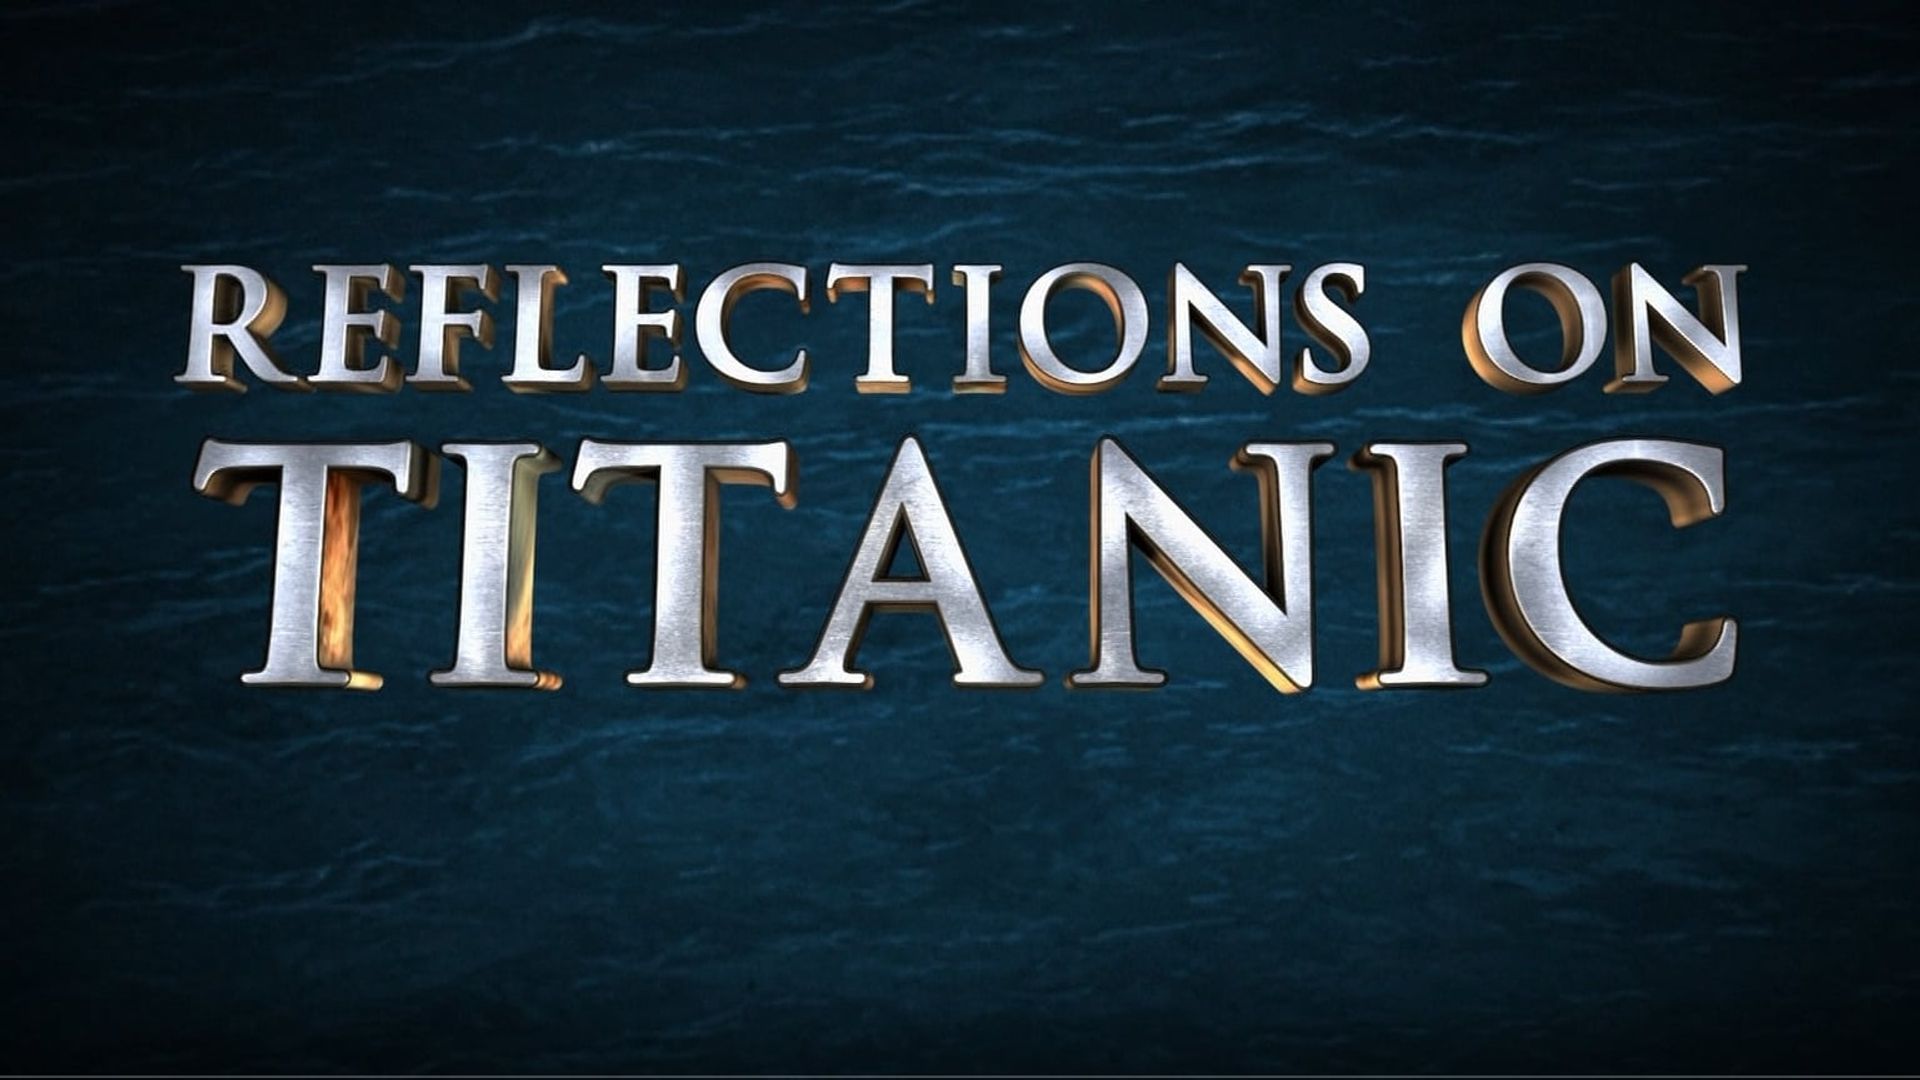 Reflections on Titanic background